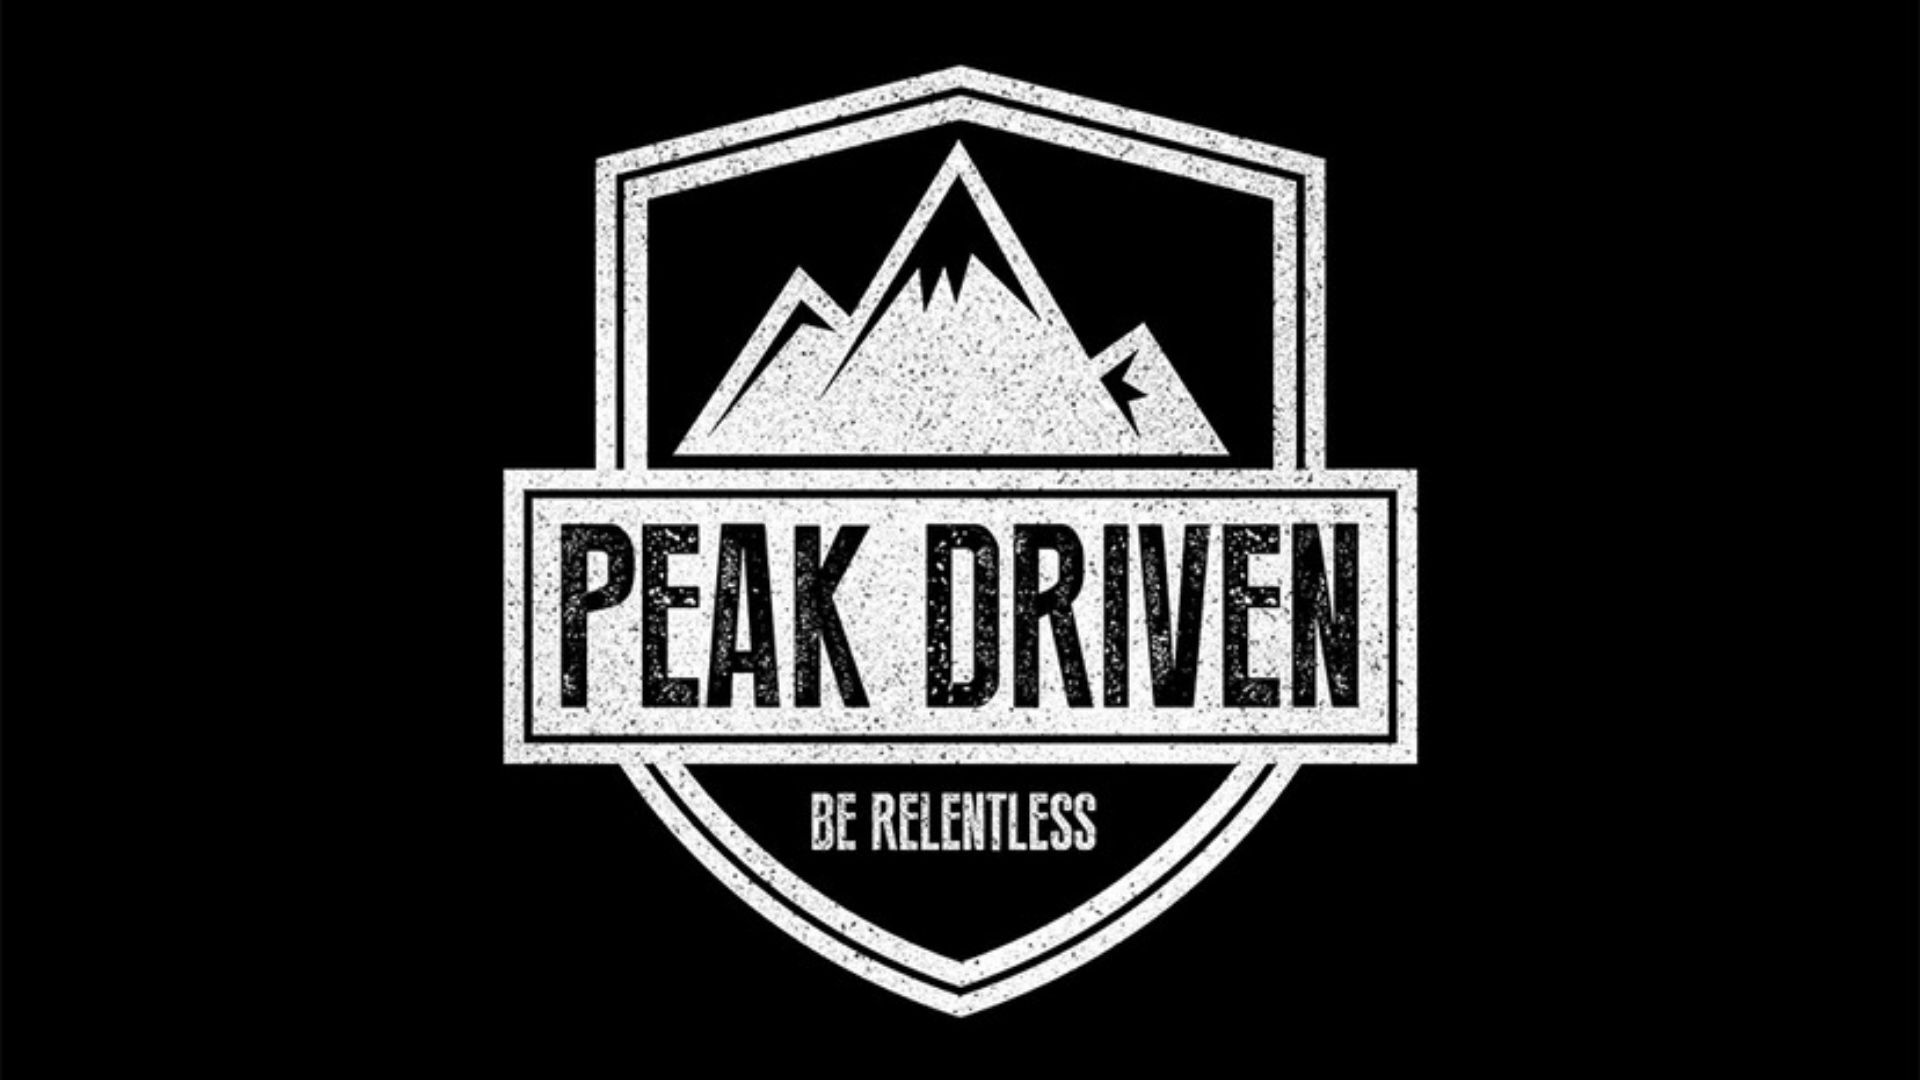 Peak Driven